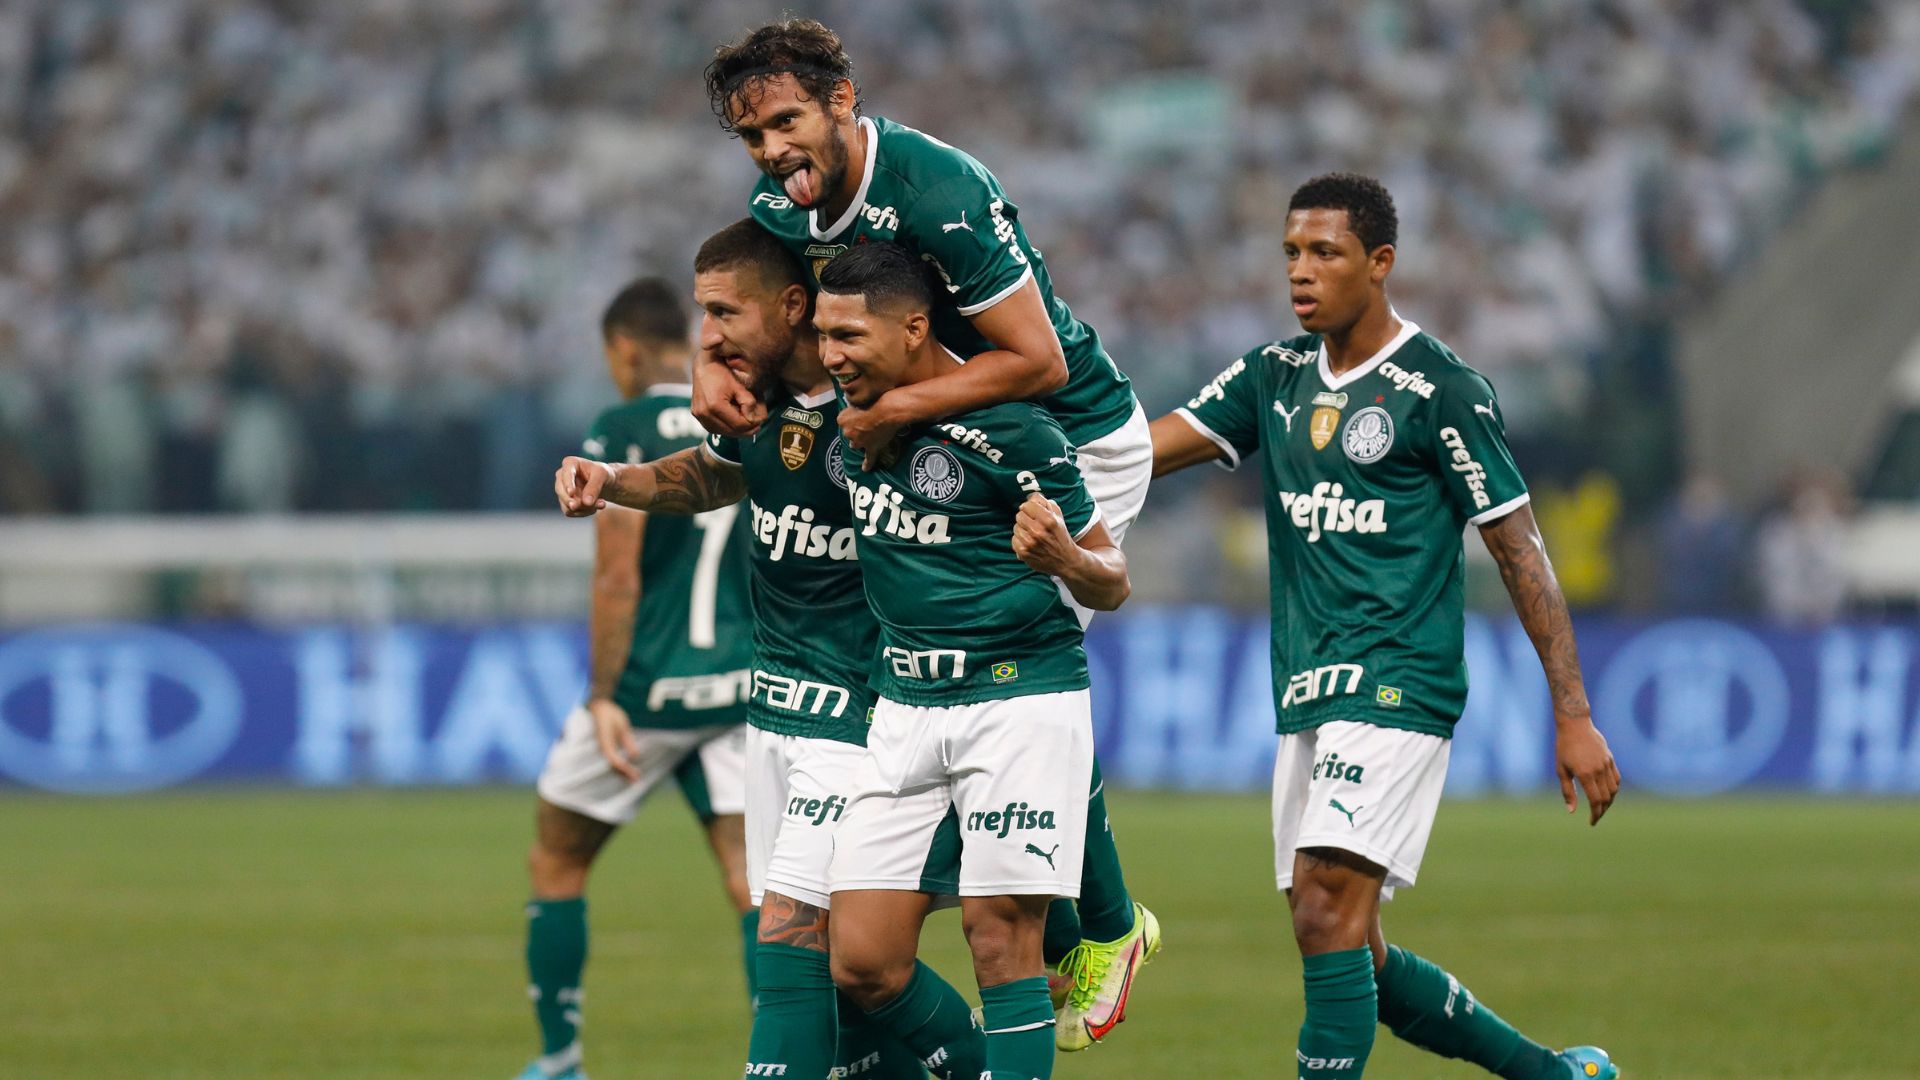 Jogadores do Palmeiras comemorando gol